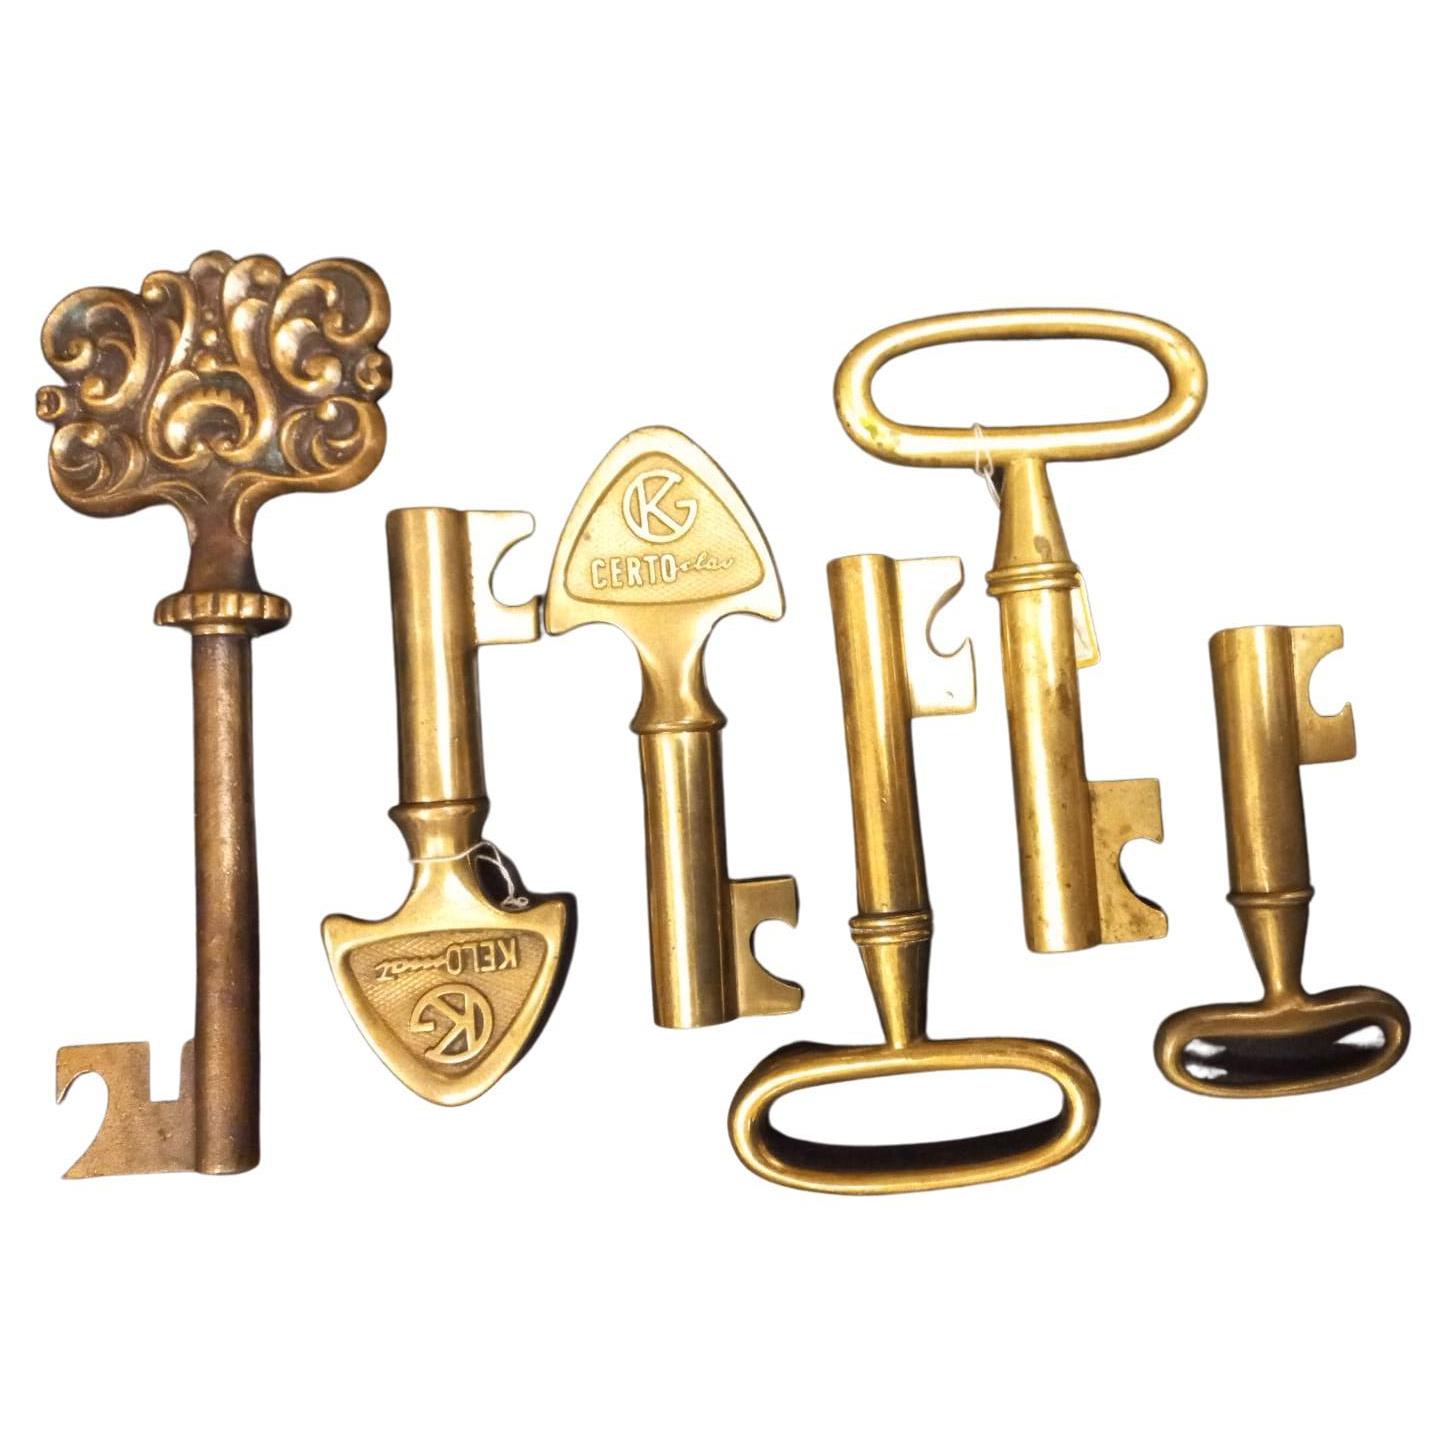 Other Auböck, key corkscrew, collection, Vienna Austria For Sale